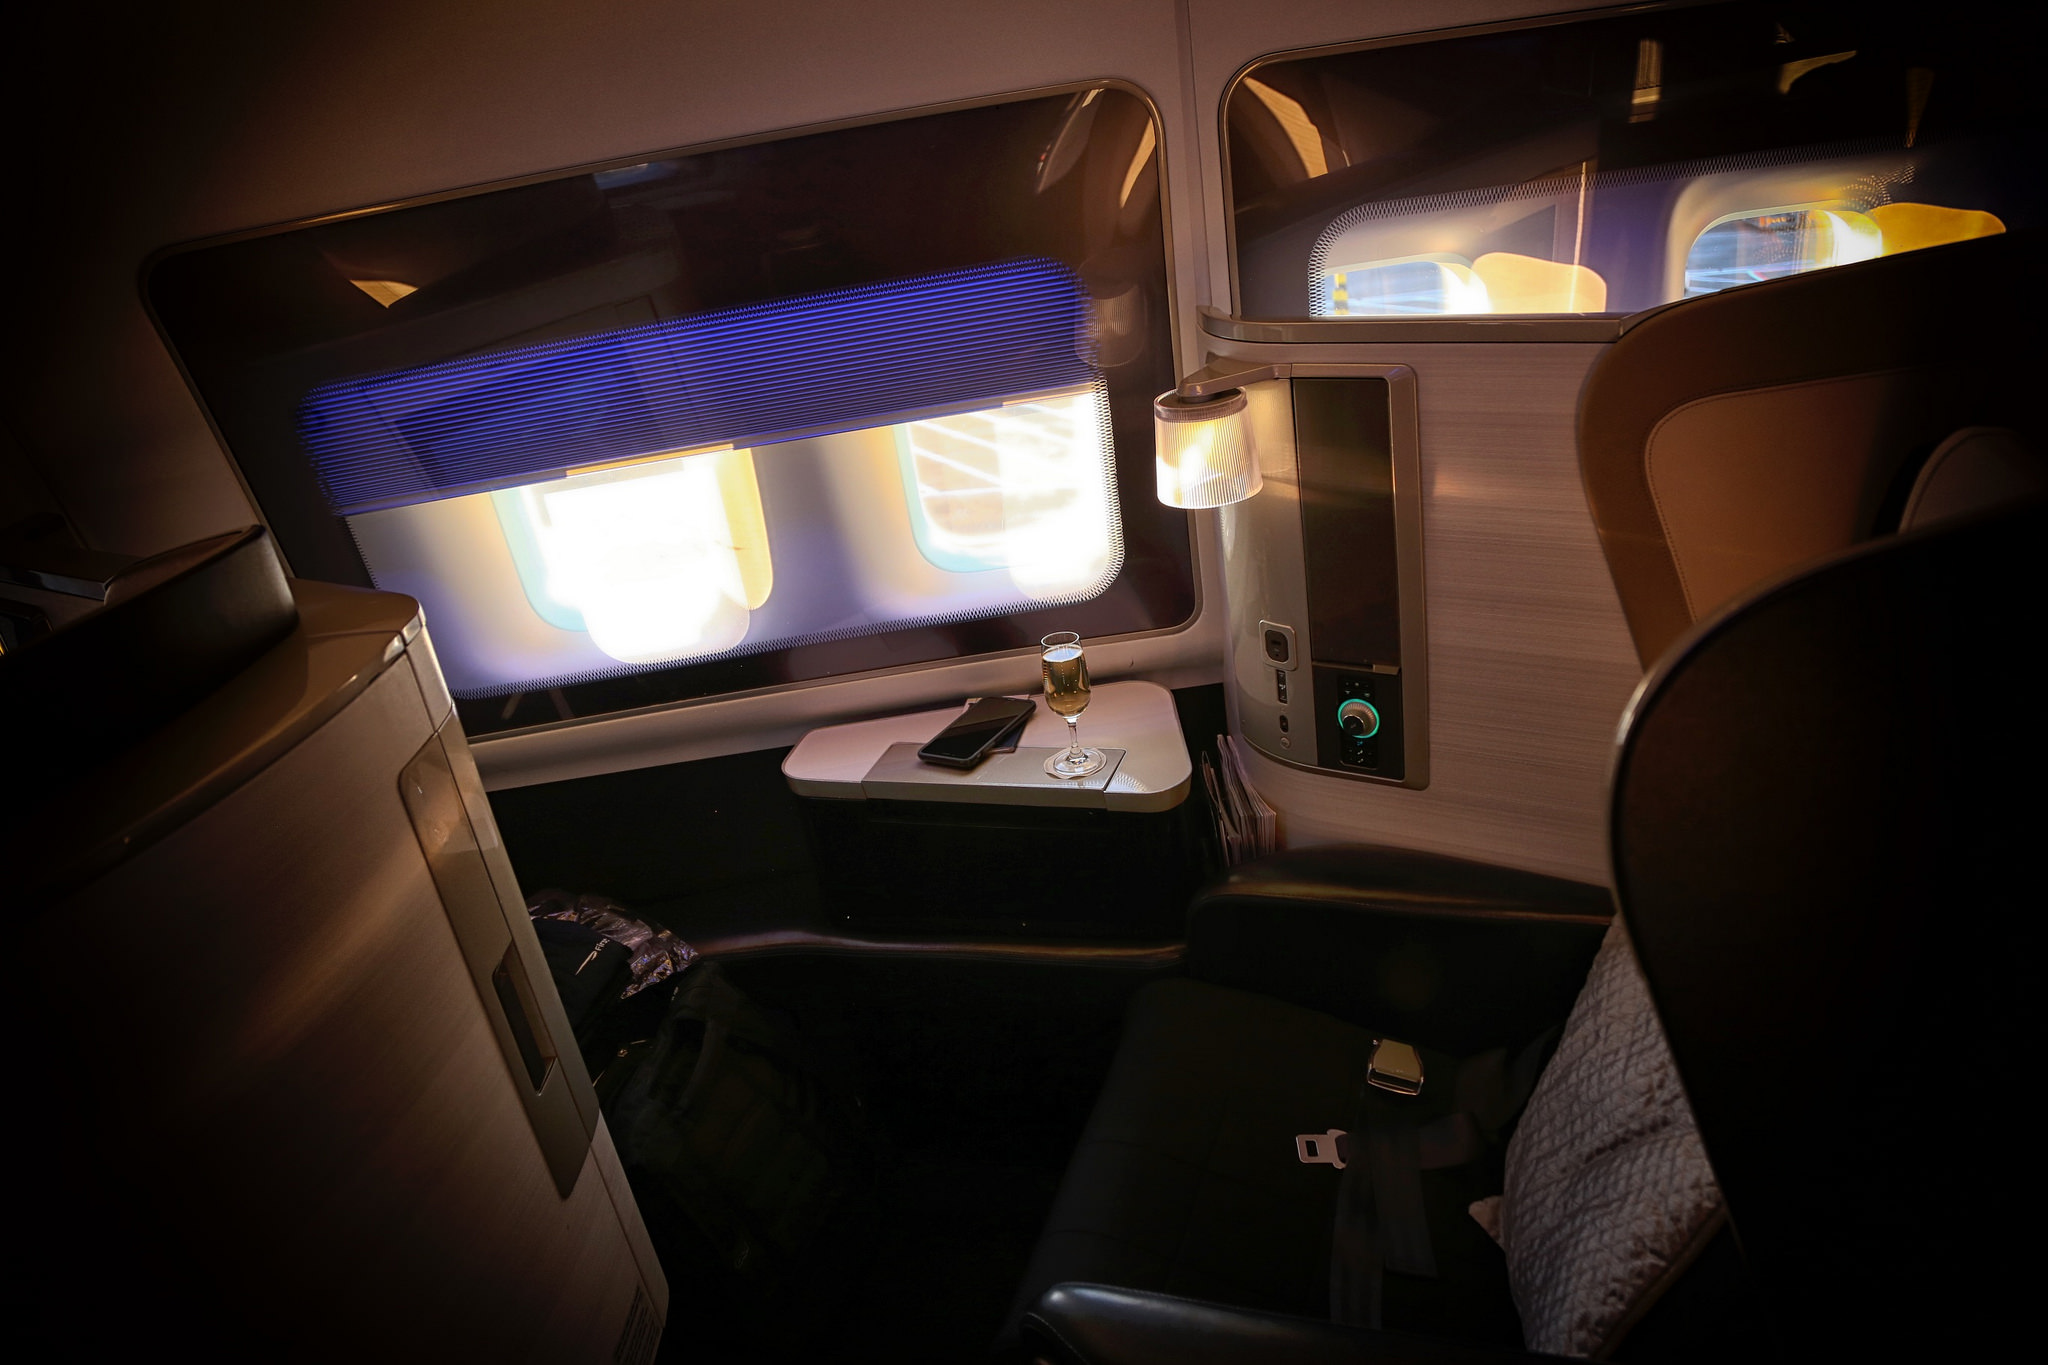 First class seat on British Airways with window shades halfway down